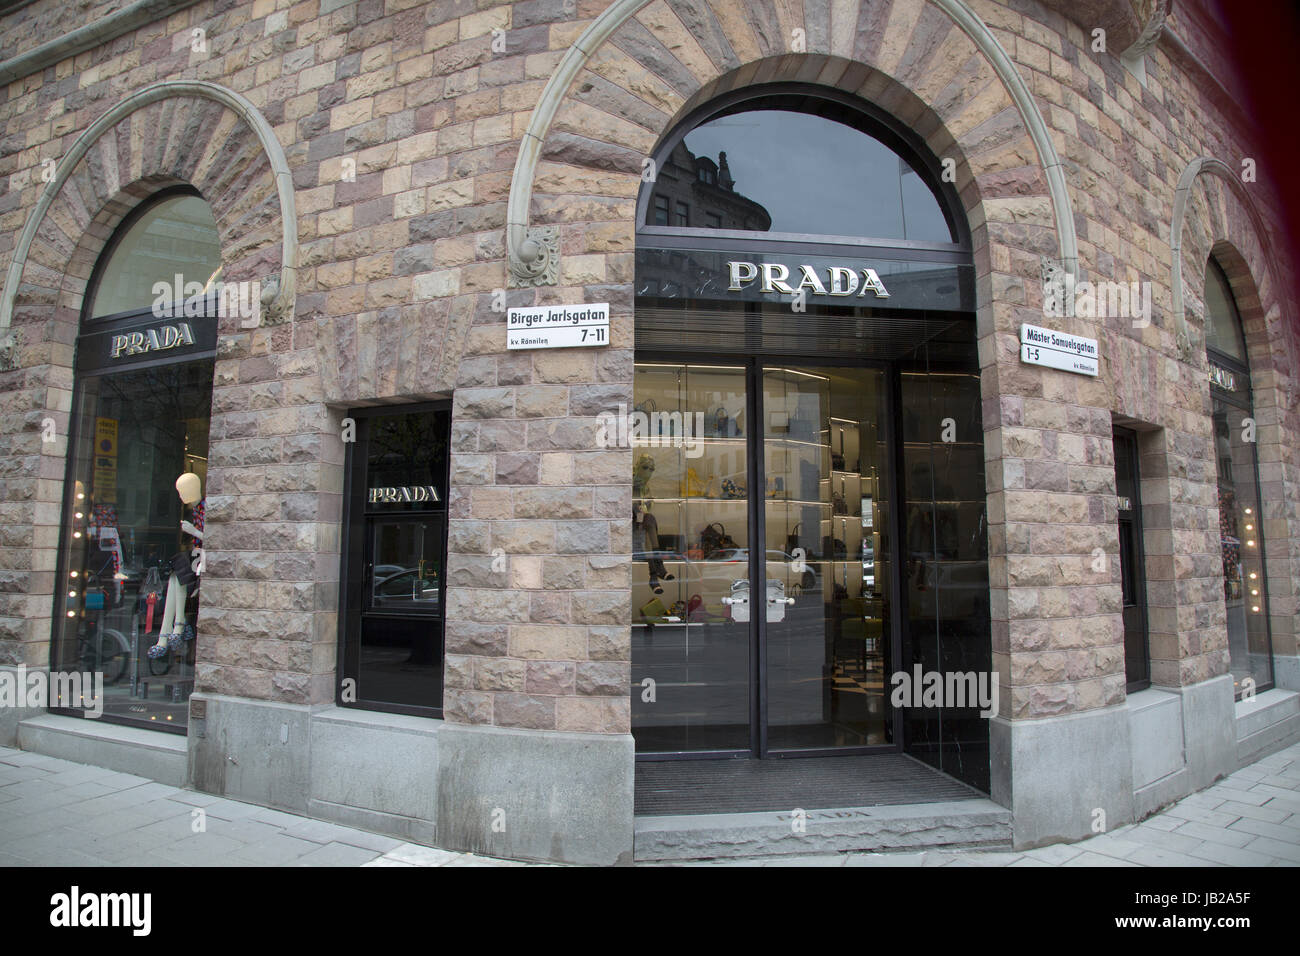 Prada Clothes Shop; Birger Jarlsgatan Street; Stockholm; Sweden Stock Photo  - Alamy